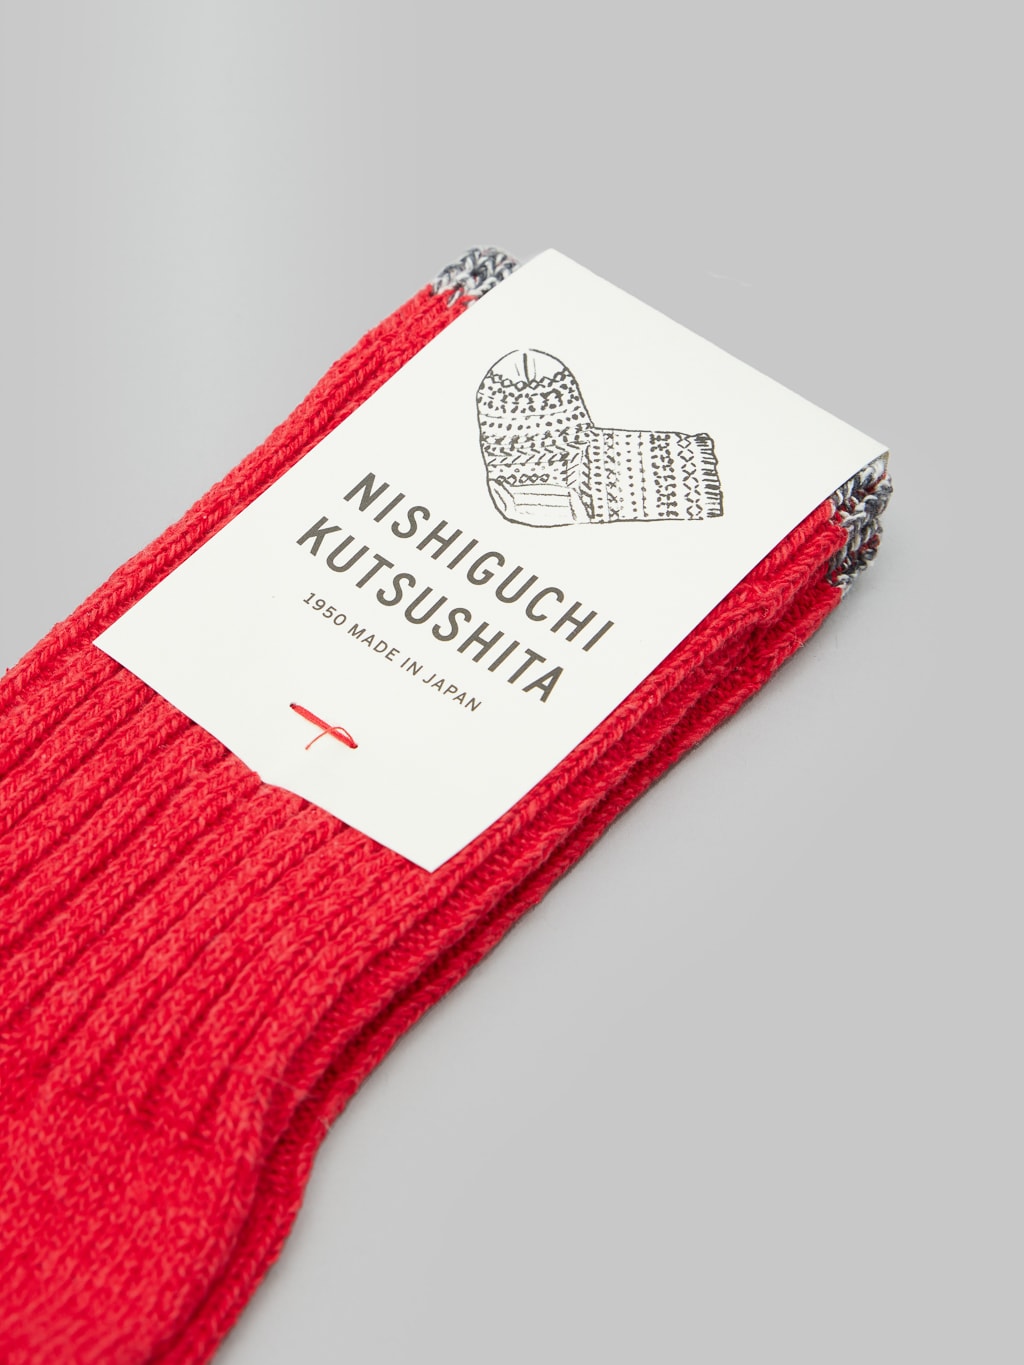 nishiguchi kutsushita silk cotton socks red front label